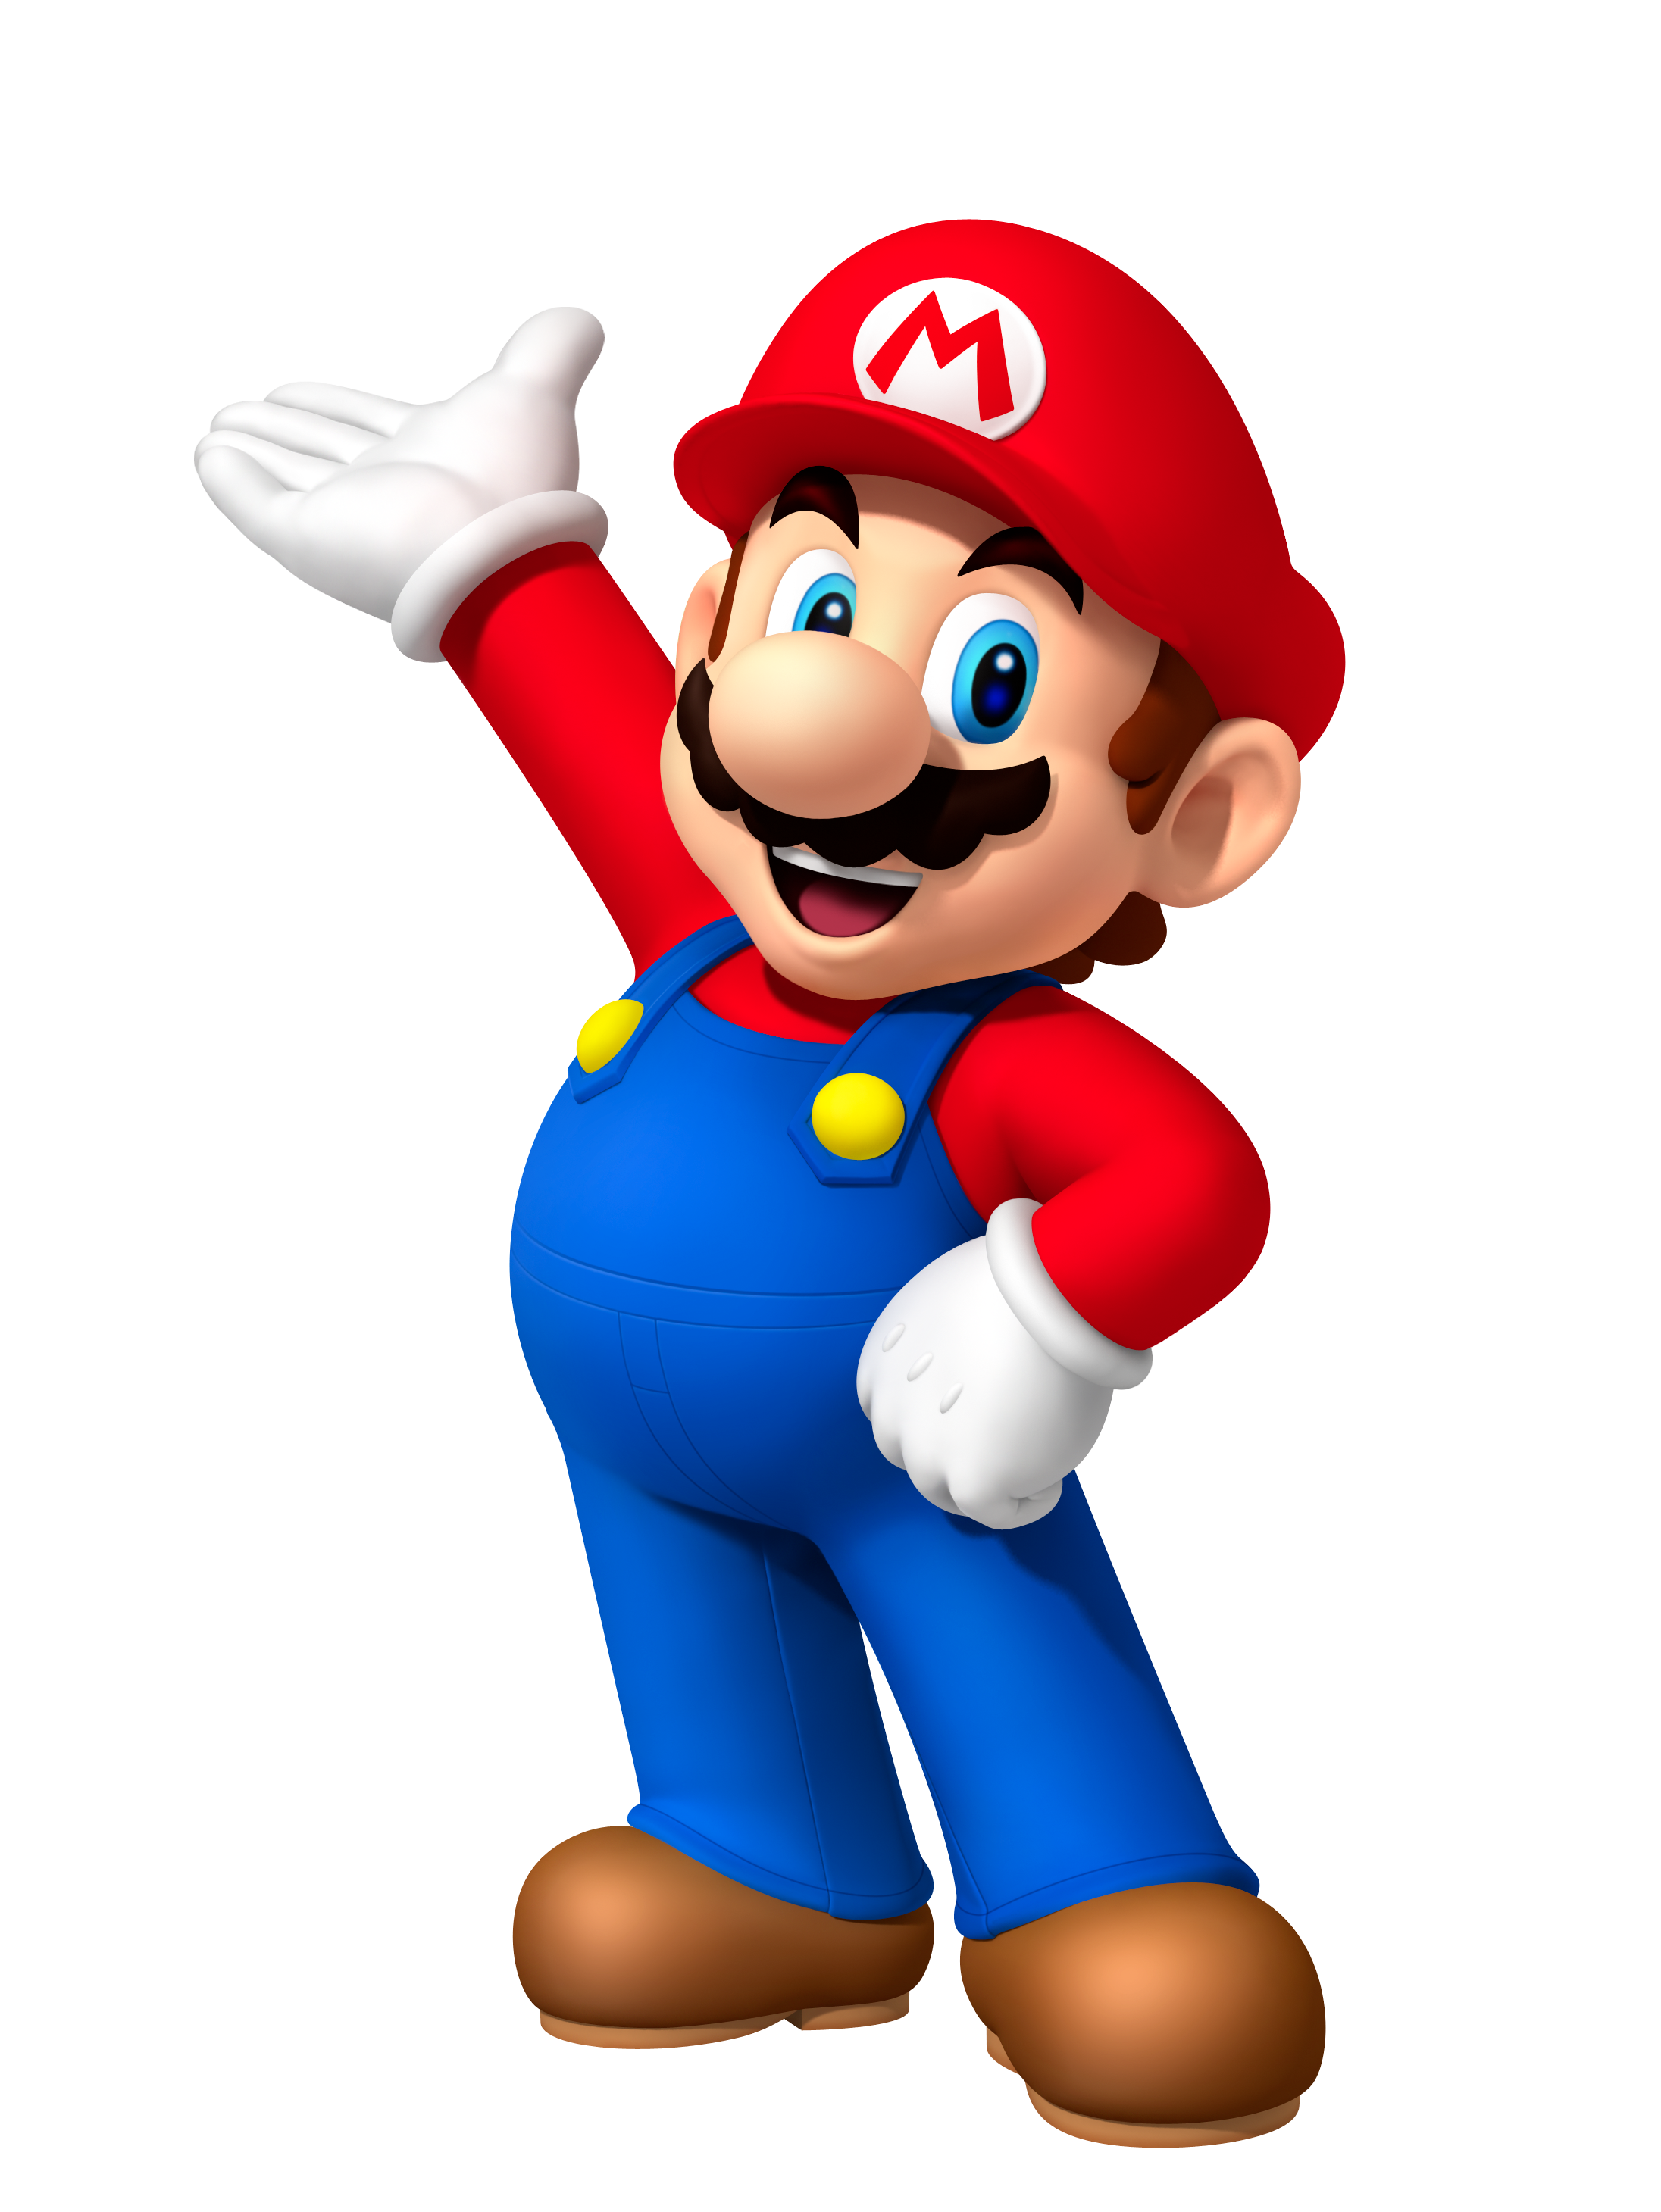 World 1 (Super Mario 3D World) - Super Mario Wiki, the Mario